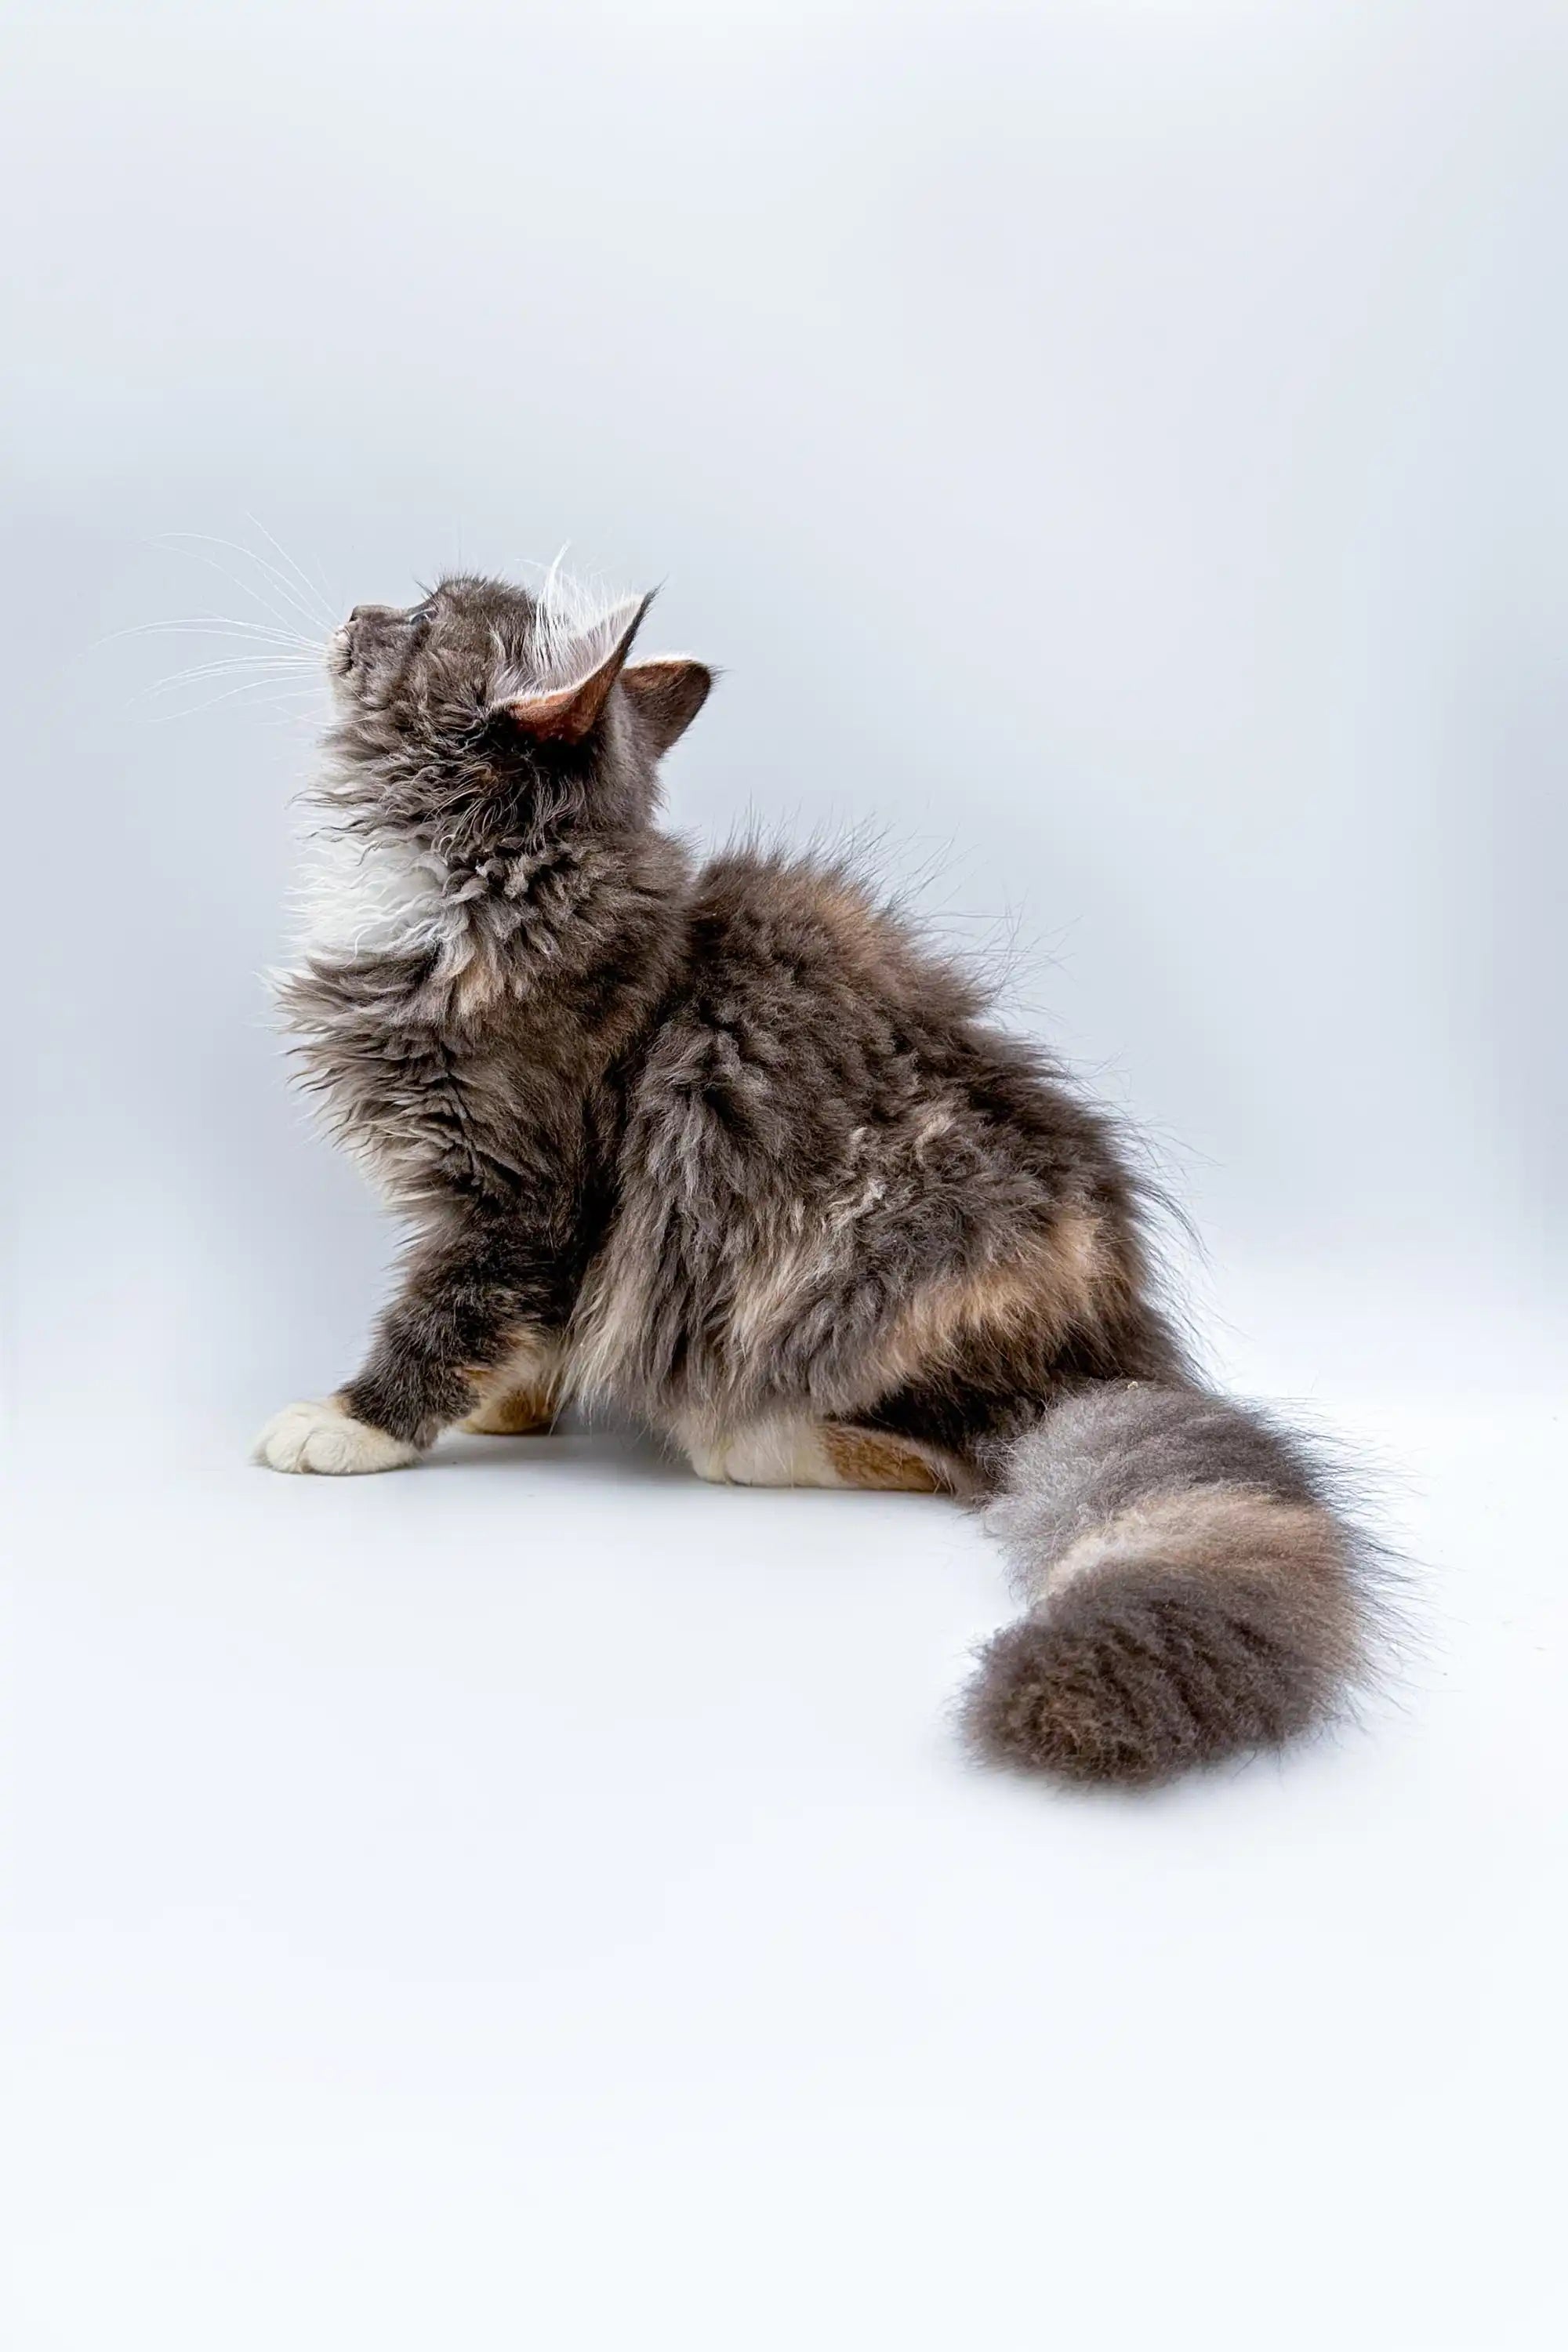 Maine Coon Kittens for Sale Fuji | Kitten